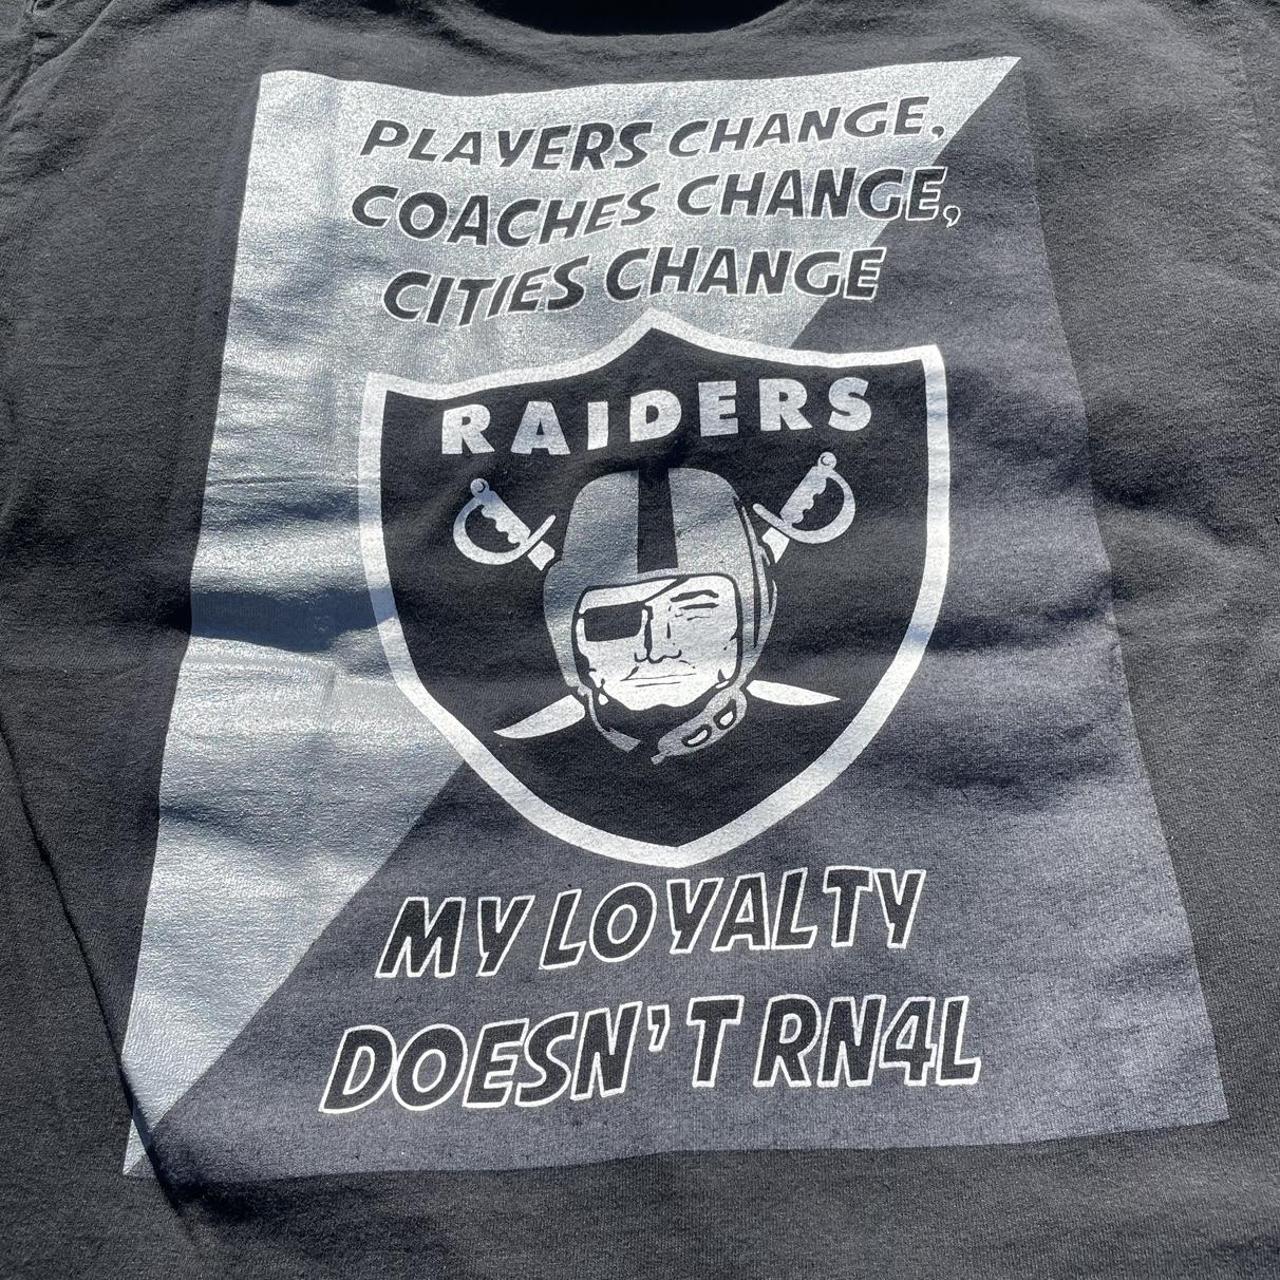 Vintage Raiders NFL Graphic Shirt Size L Brand: - Depop